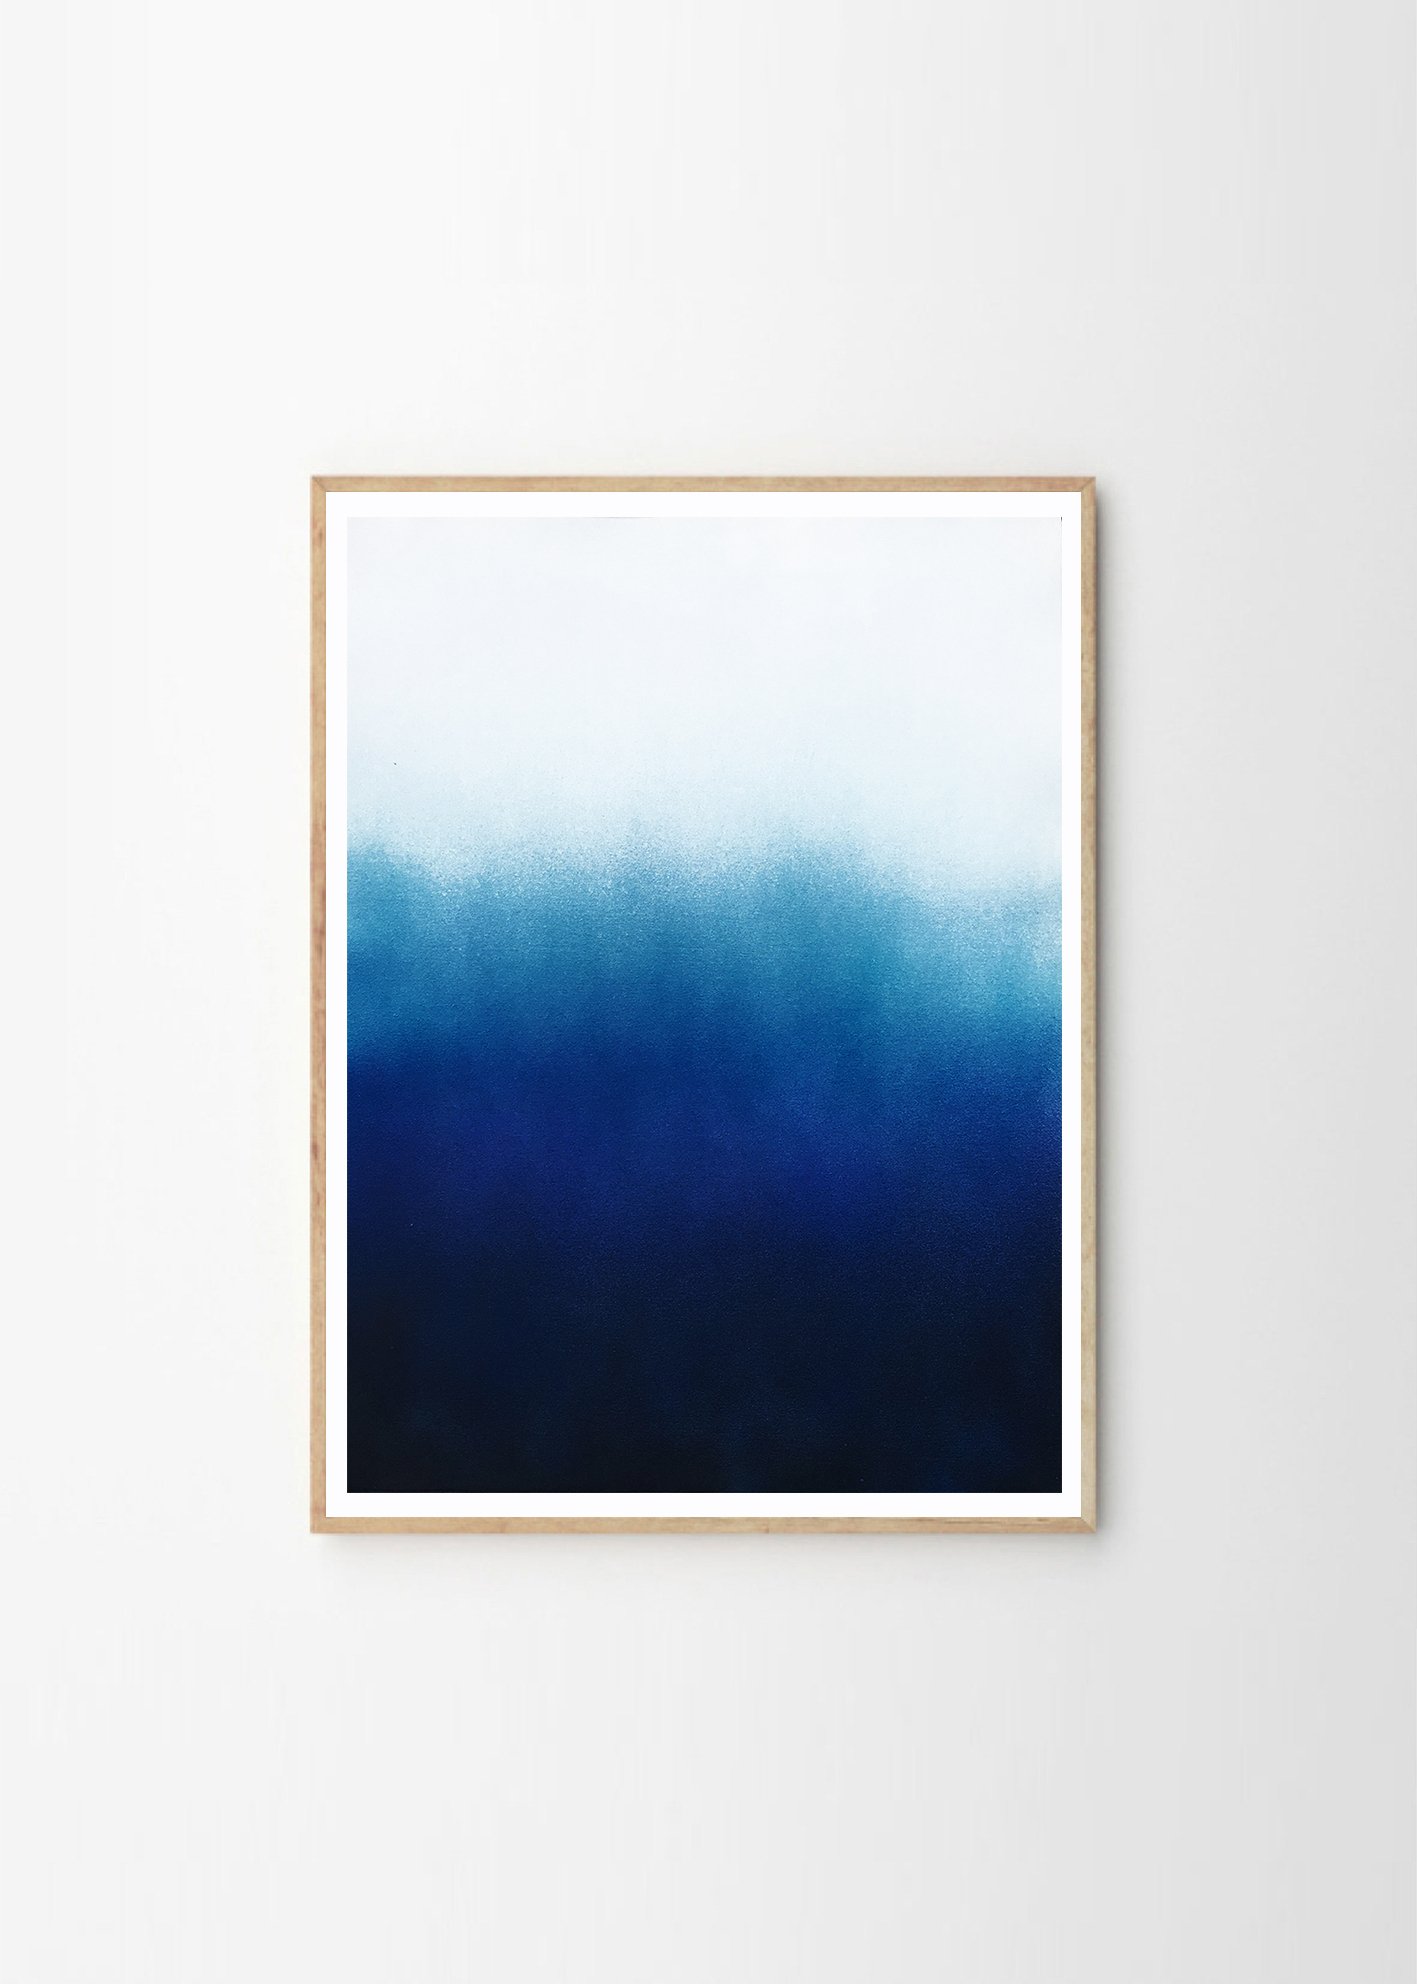 anne-nowak-northern-light-blue-frame-wood.jpg